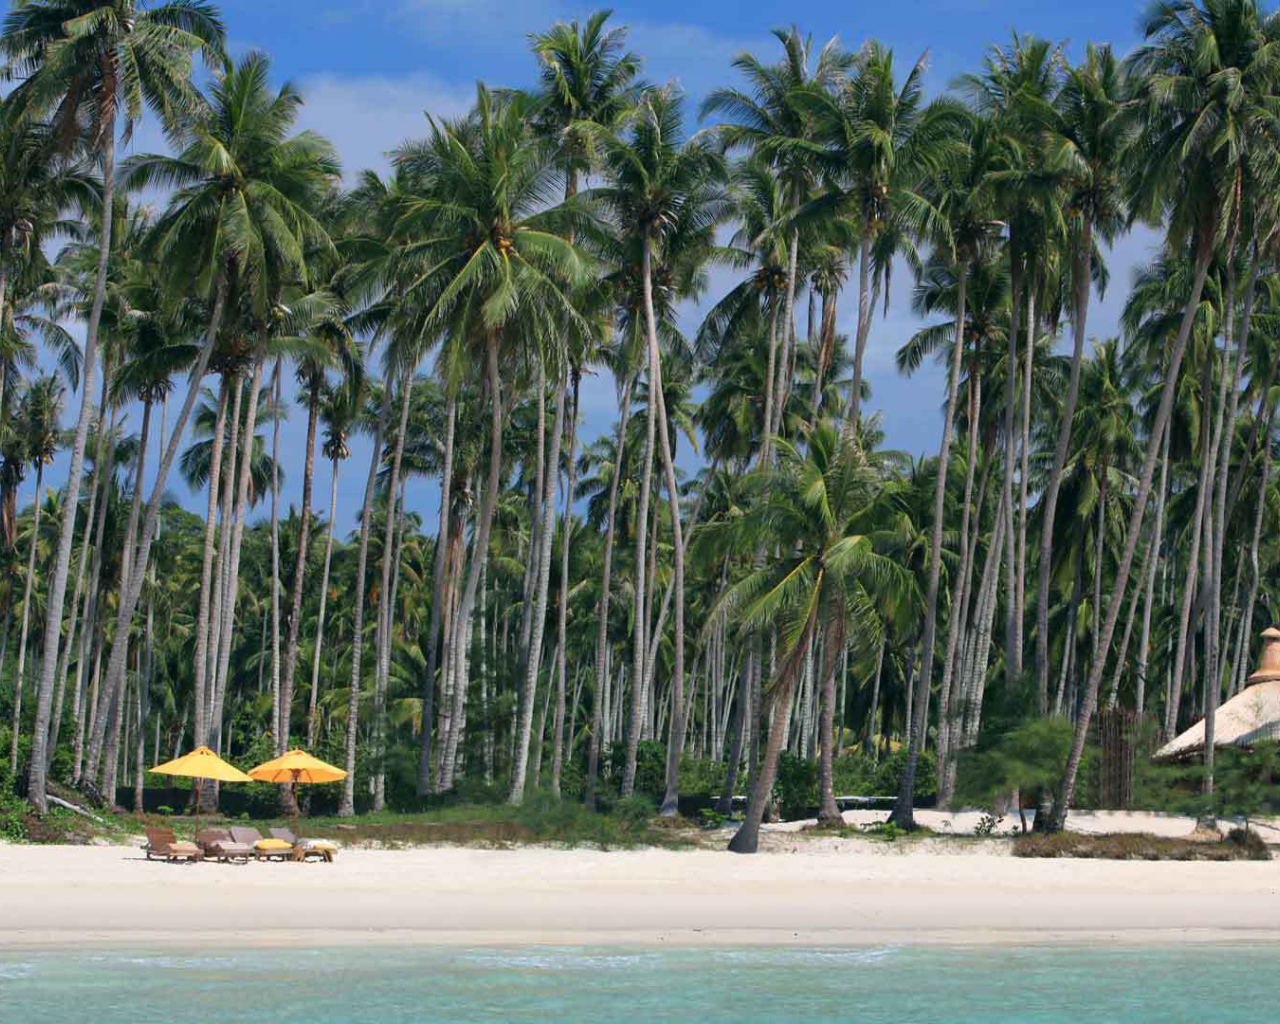 Palms on the beach in Koh Kood, Thailand